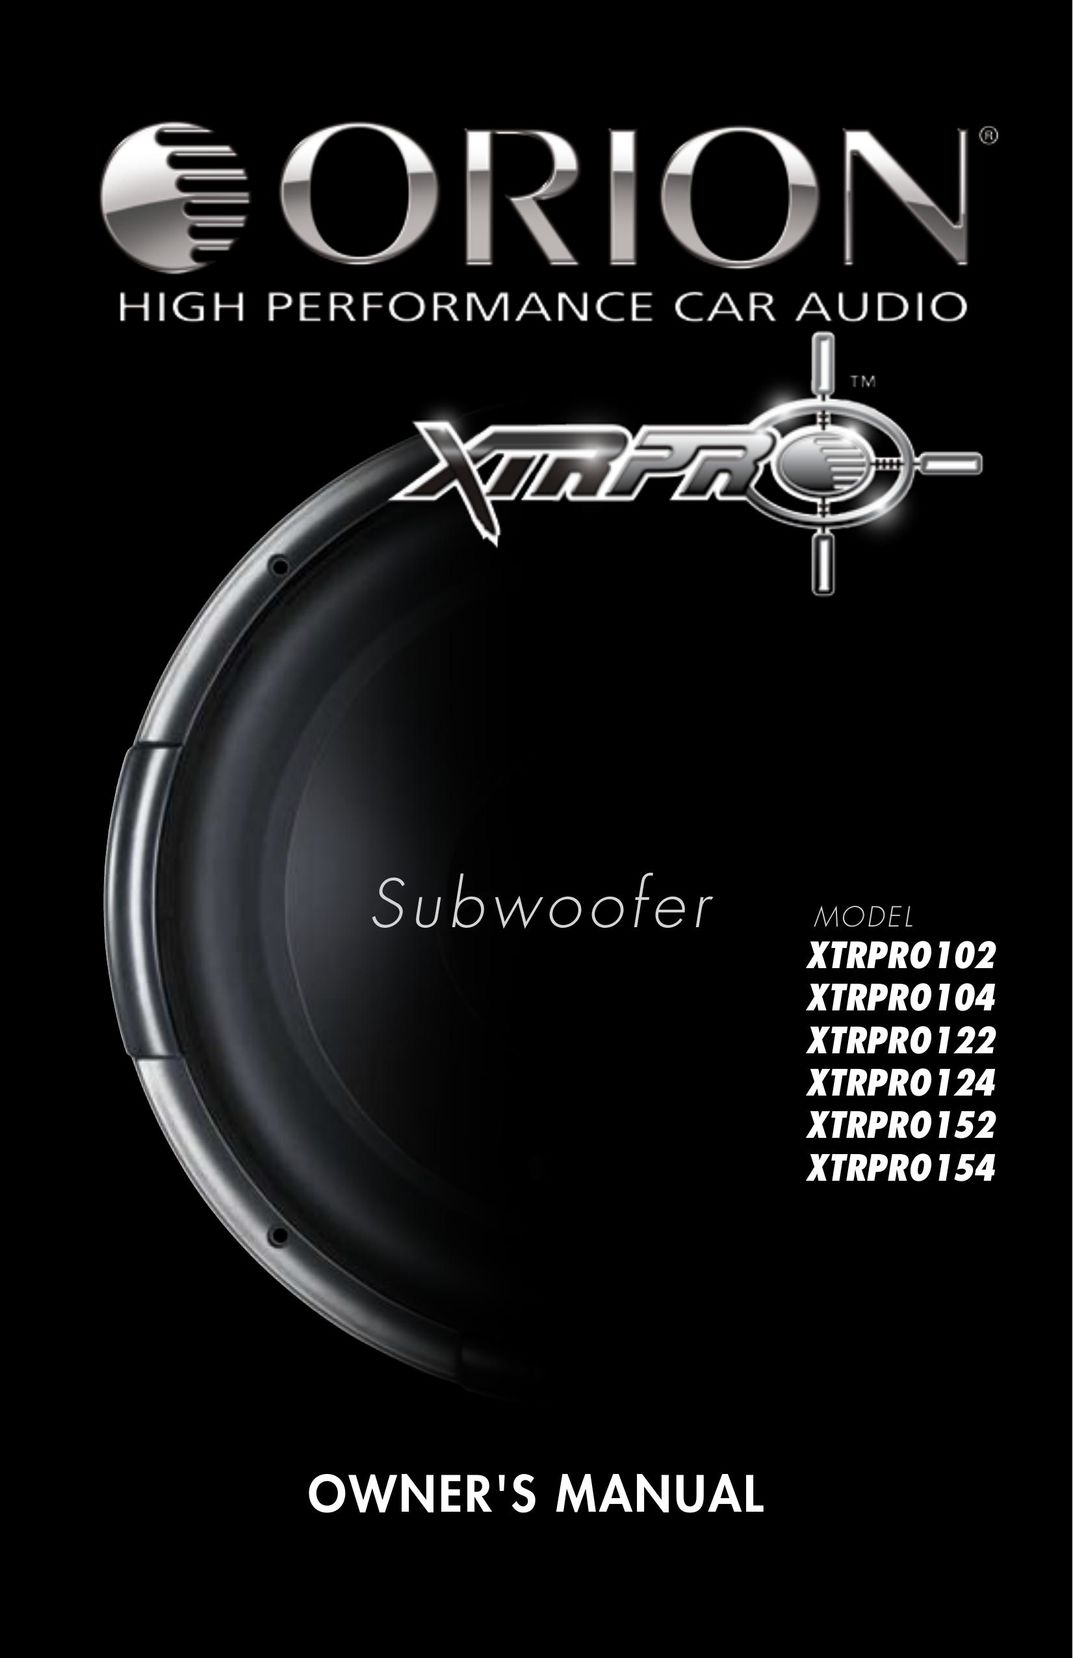 Orion Car Audio XTRPRO152 Speaker User Manual